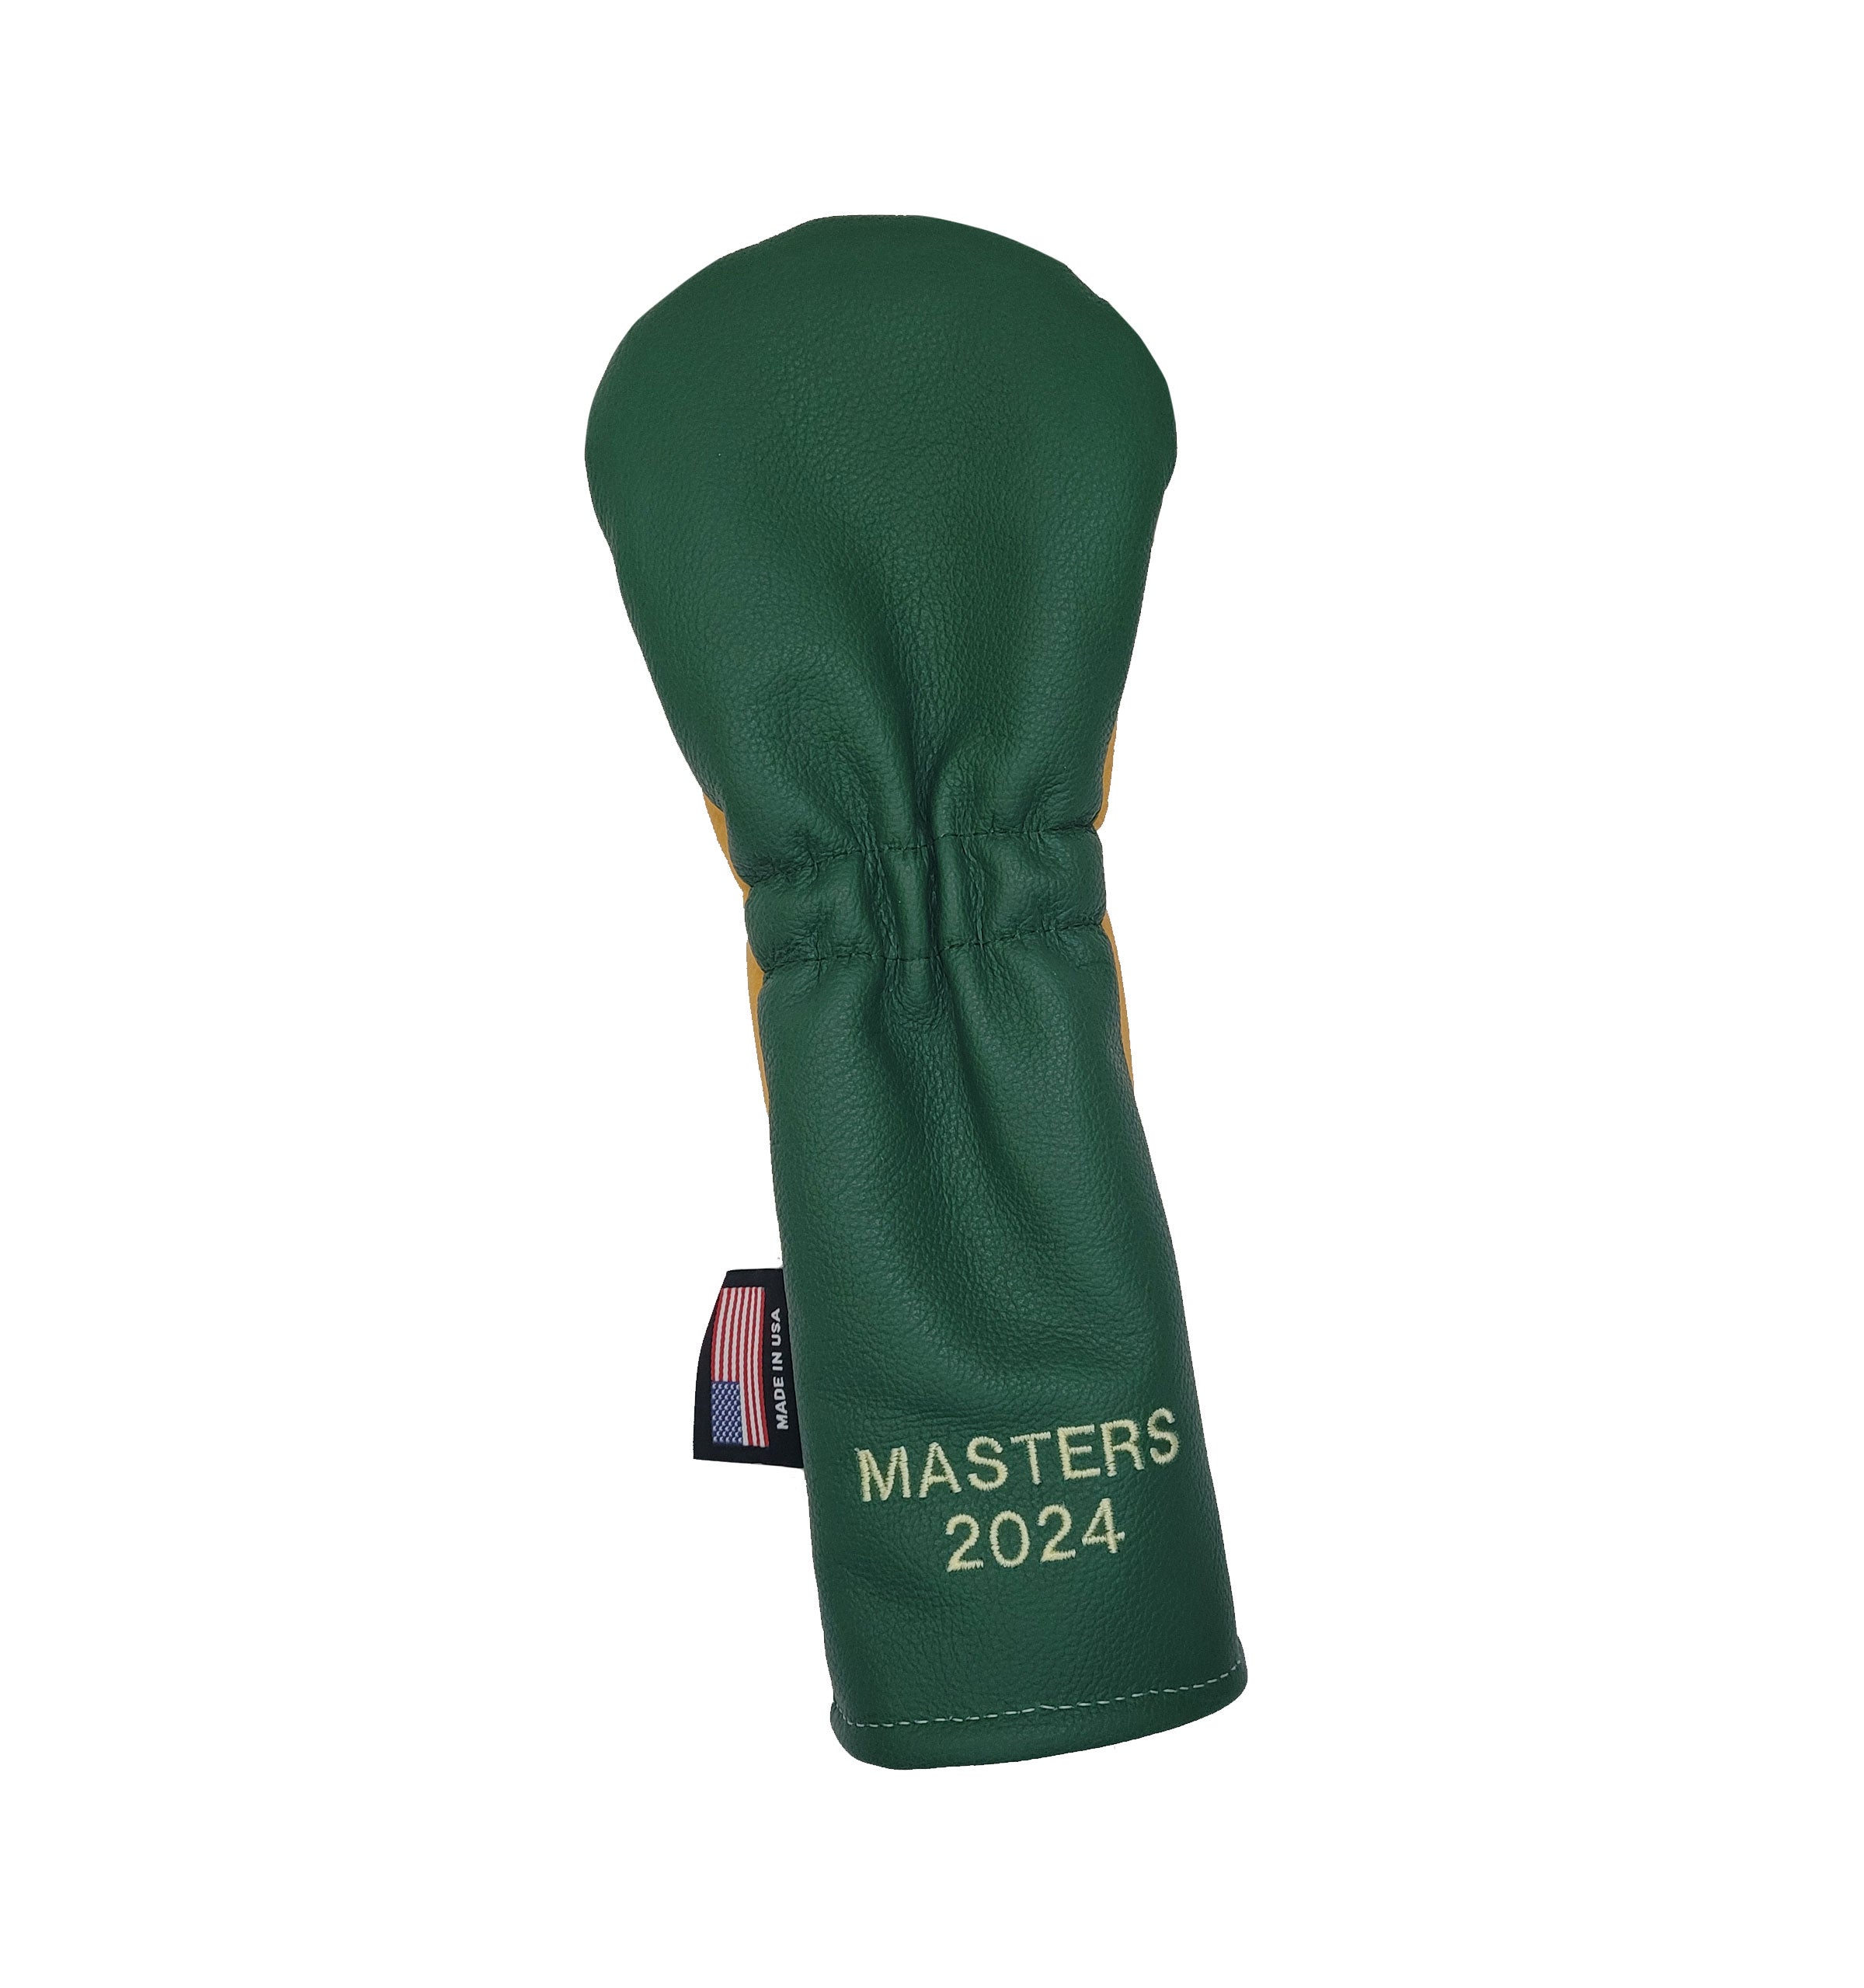 The RMG 2024 Masters/Augusta Inspired Headcover - Robert Mark Golf